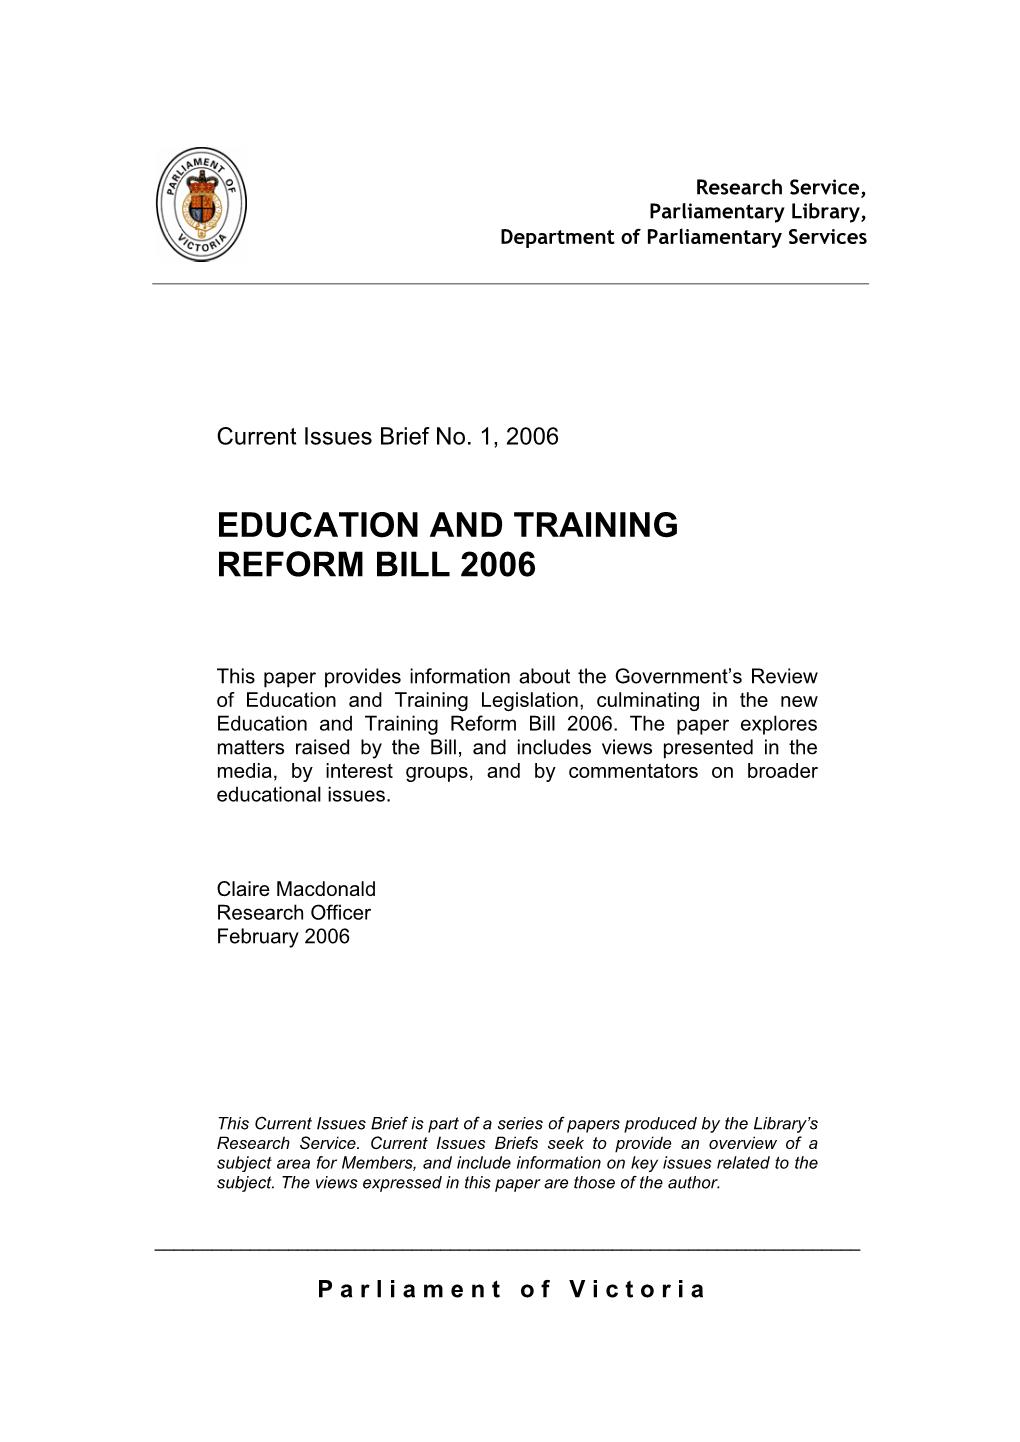 Education and Training Reform Bill 2006